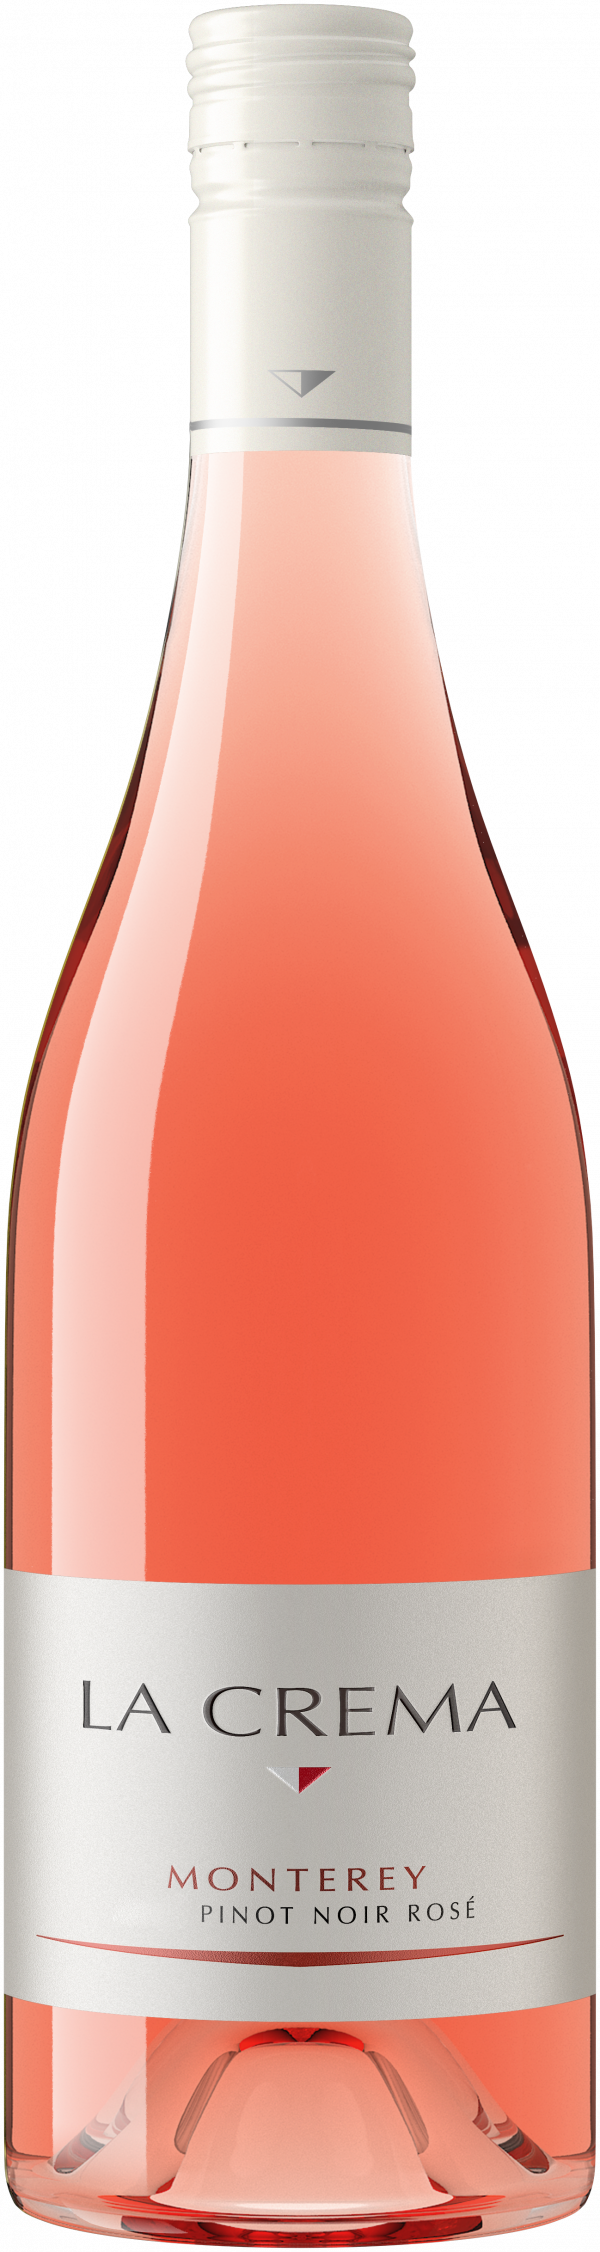 La Crema Monterey Pinot Noir Rose